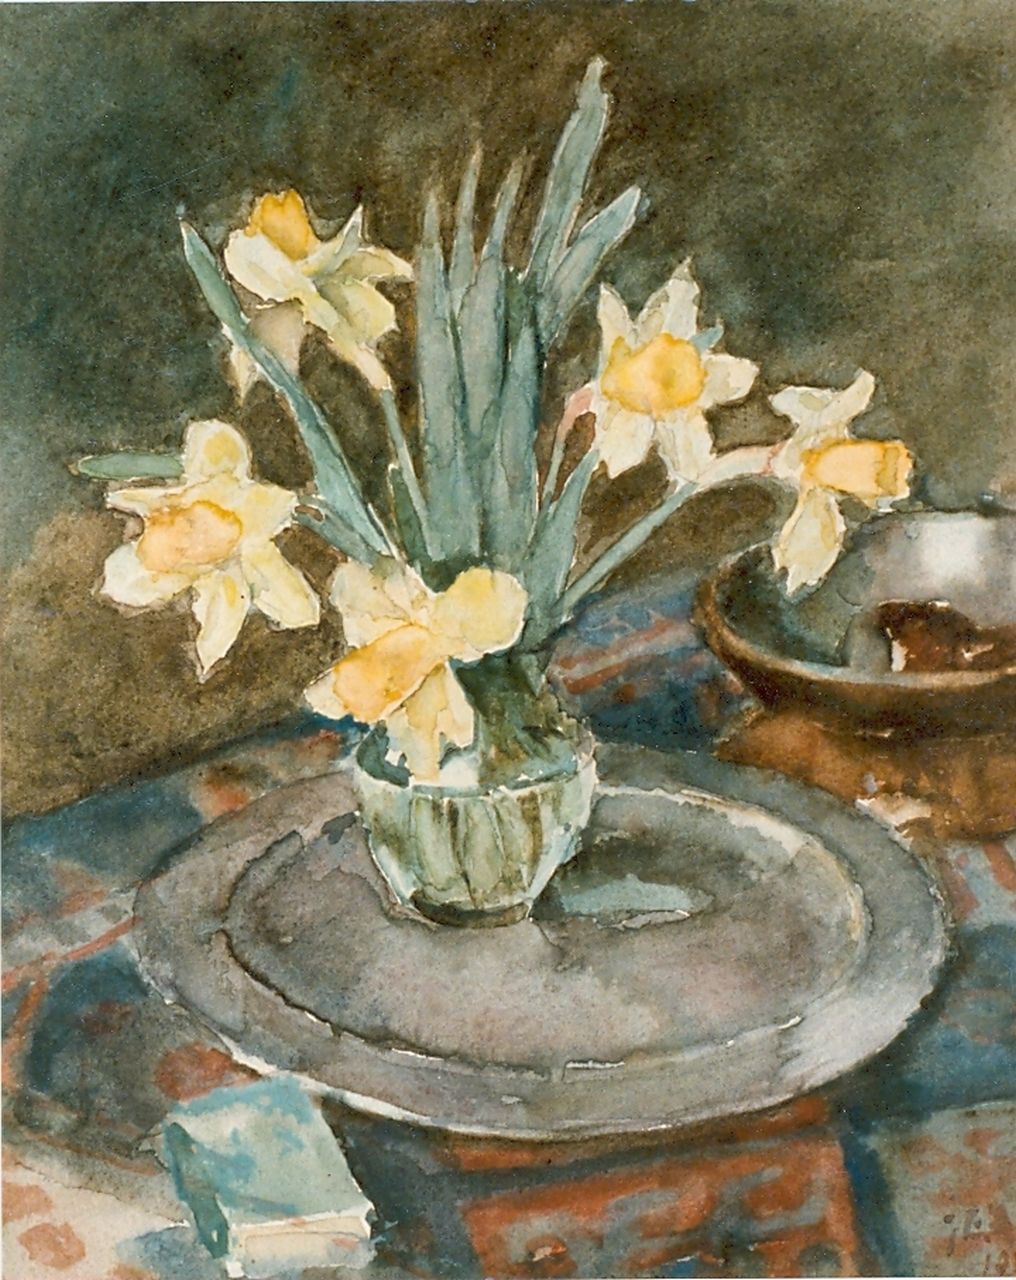 Akkeringa J.E.  | Johannes Evert 'Jan' Akkeringa, Daffodils in a vase, watercolour on paper 31.0 x 26.0 cm, signed l.r. and dated 1952